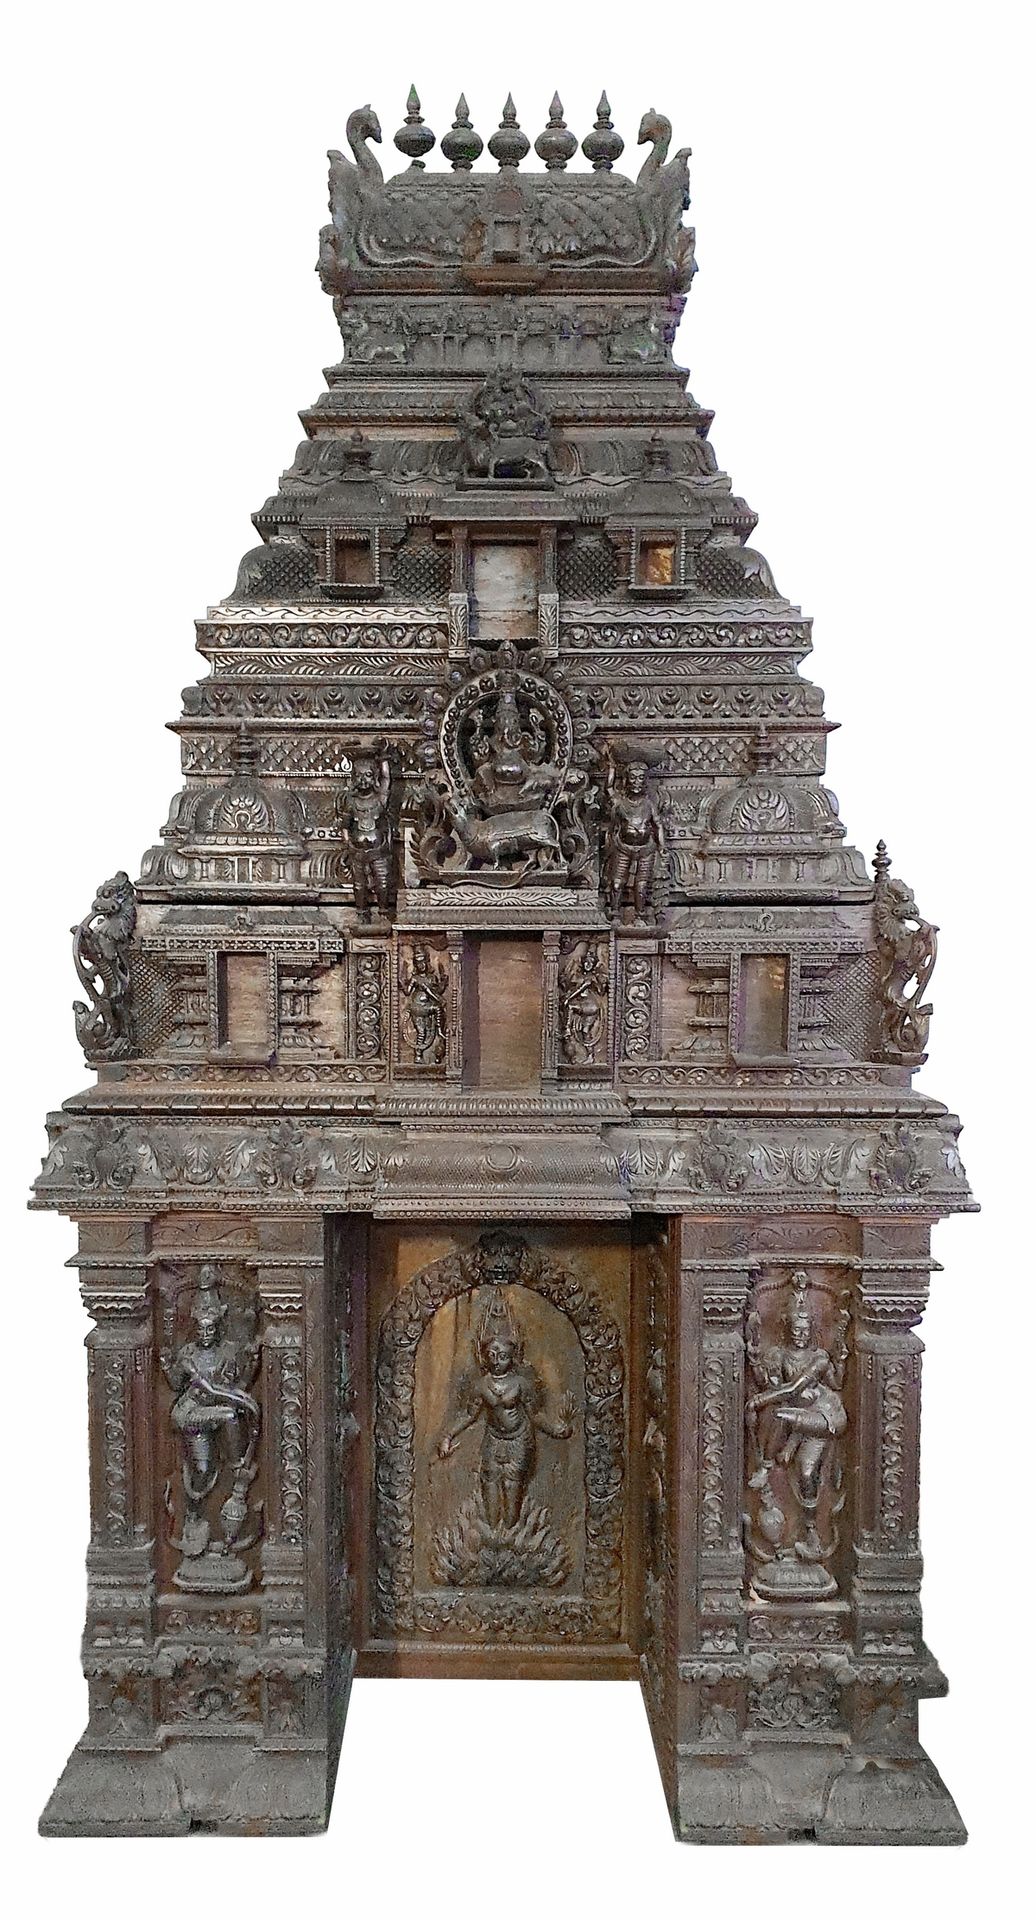 ASIE, début 20ème SIECLE Impresionante templo budista
Hecho de madera dura exóti&hellip;